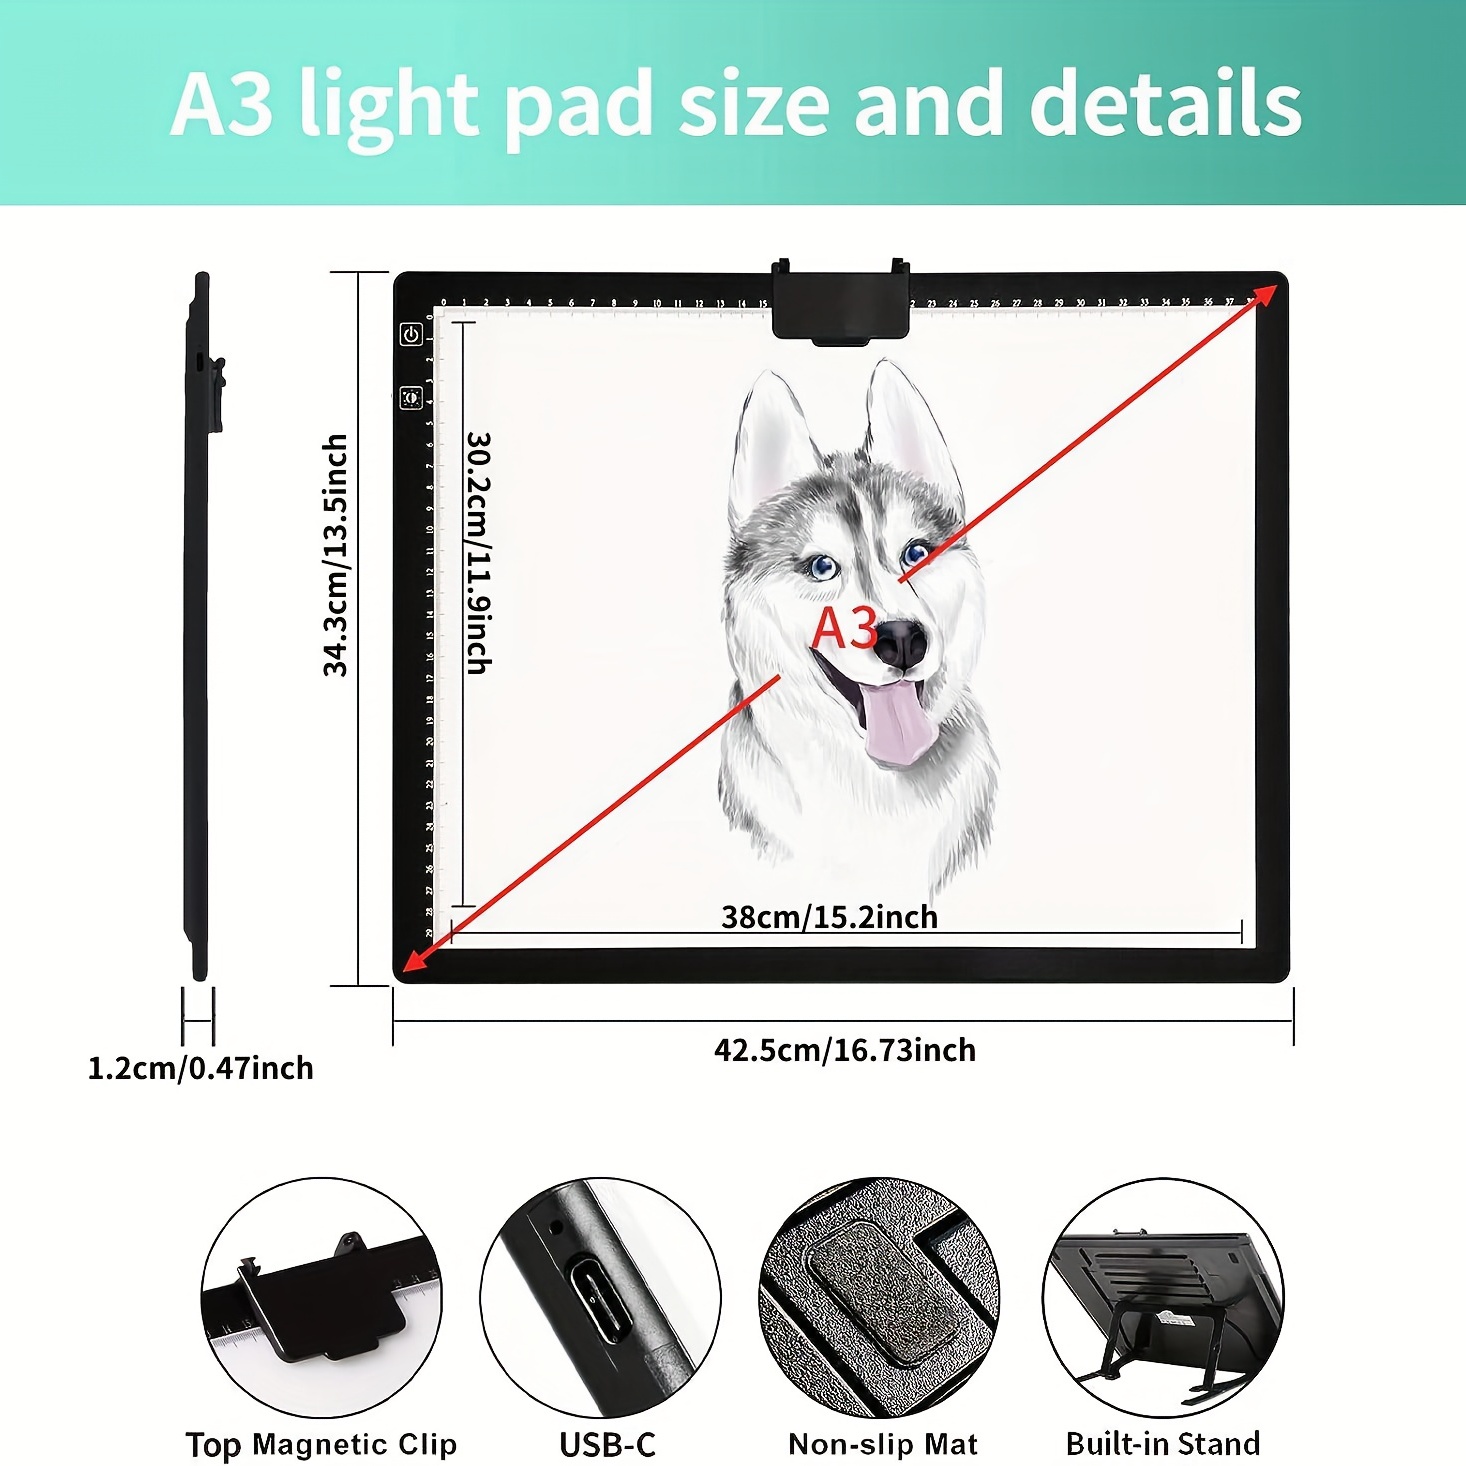 A3 Light Pad Wireless Battery Powered Light Box 6 Levels of